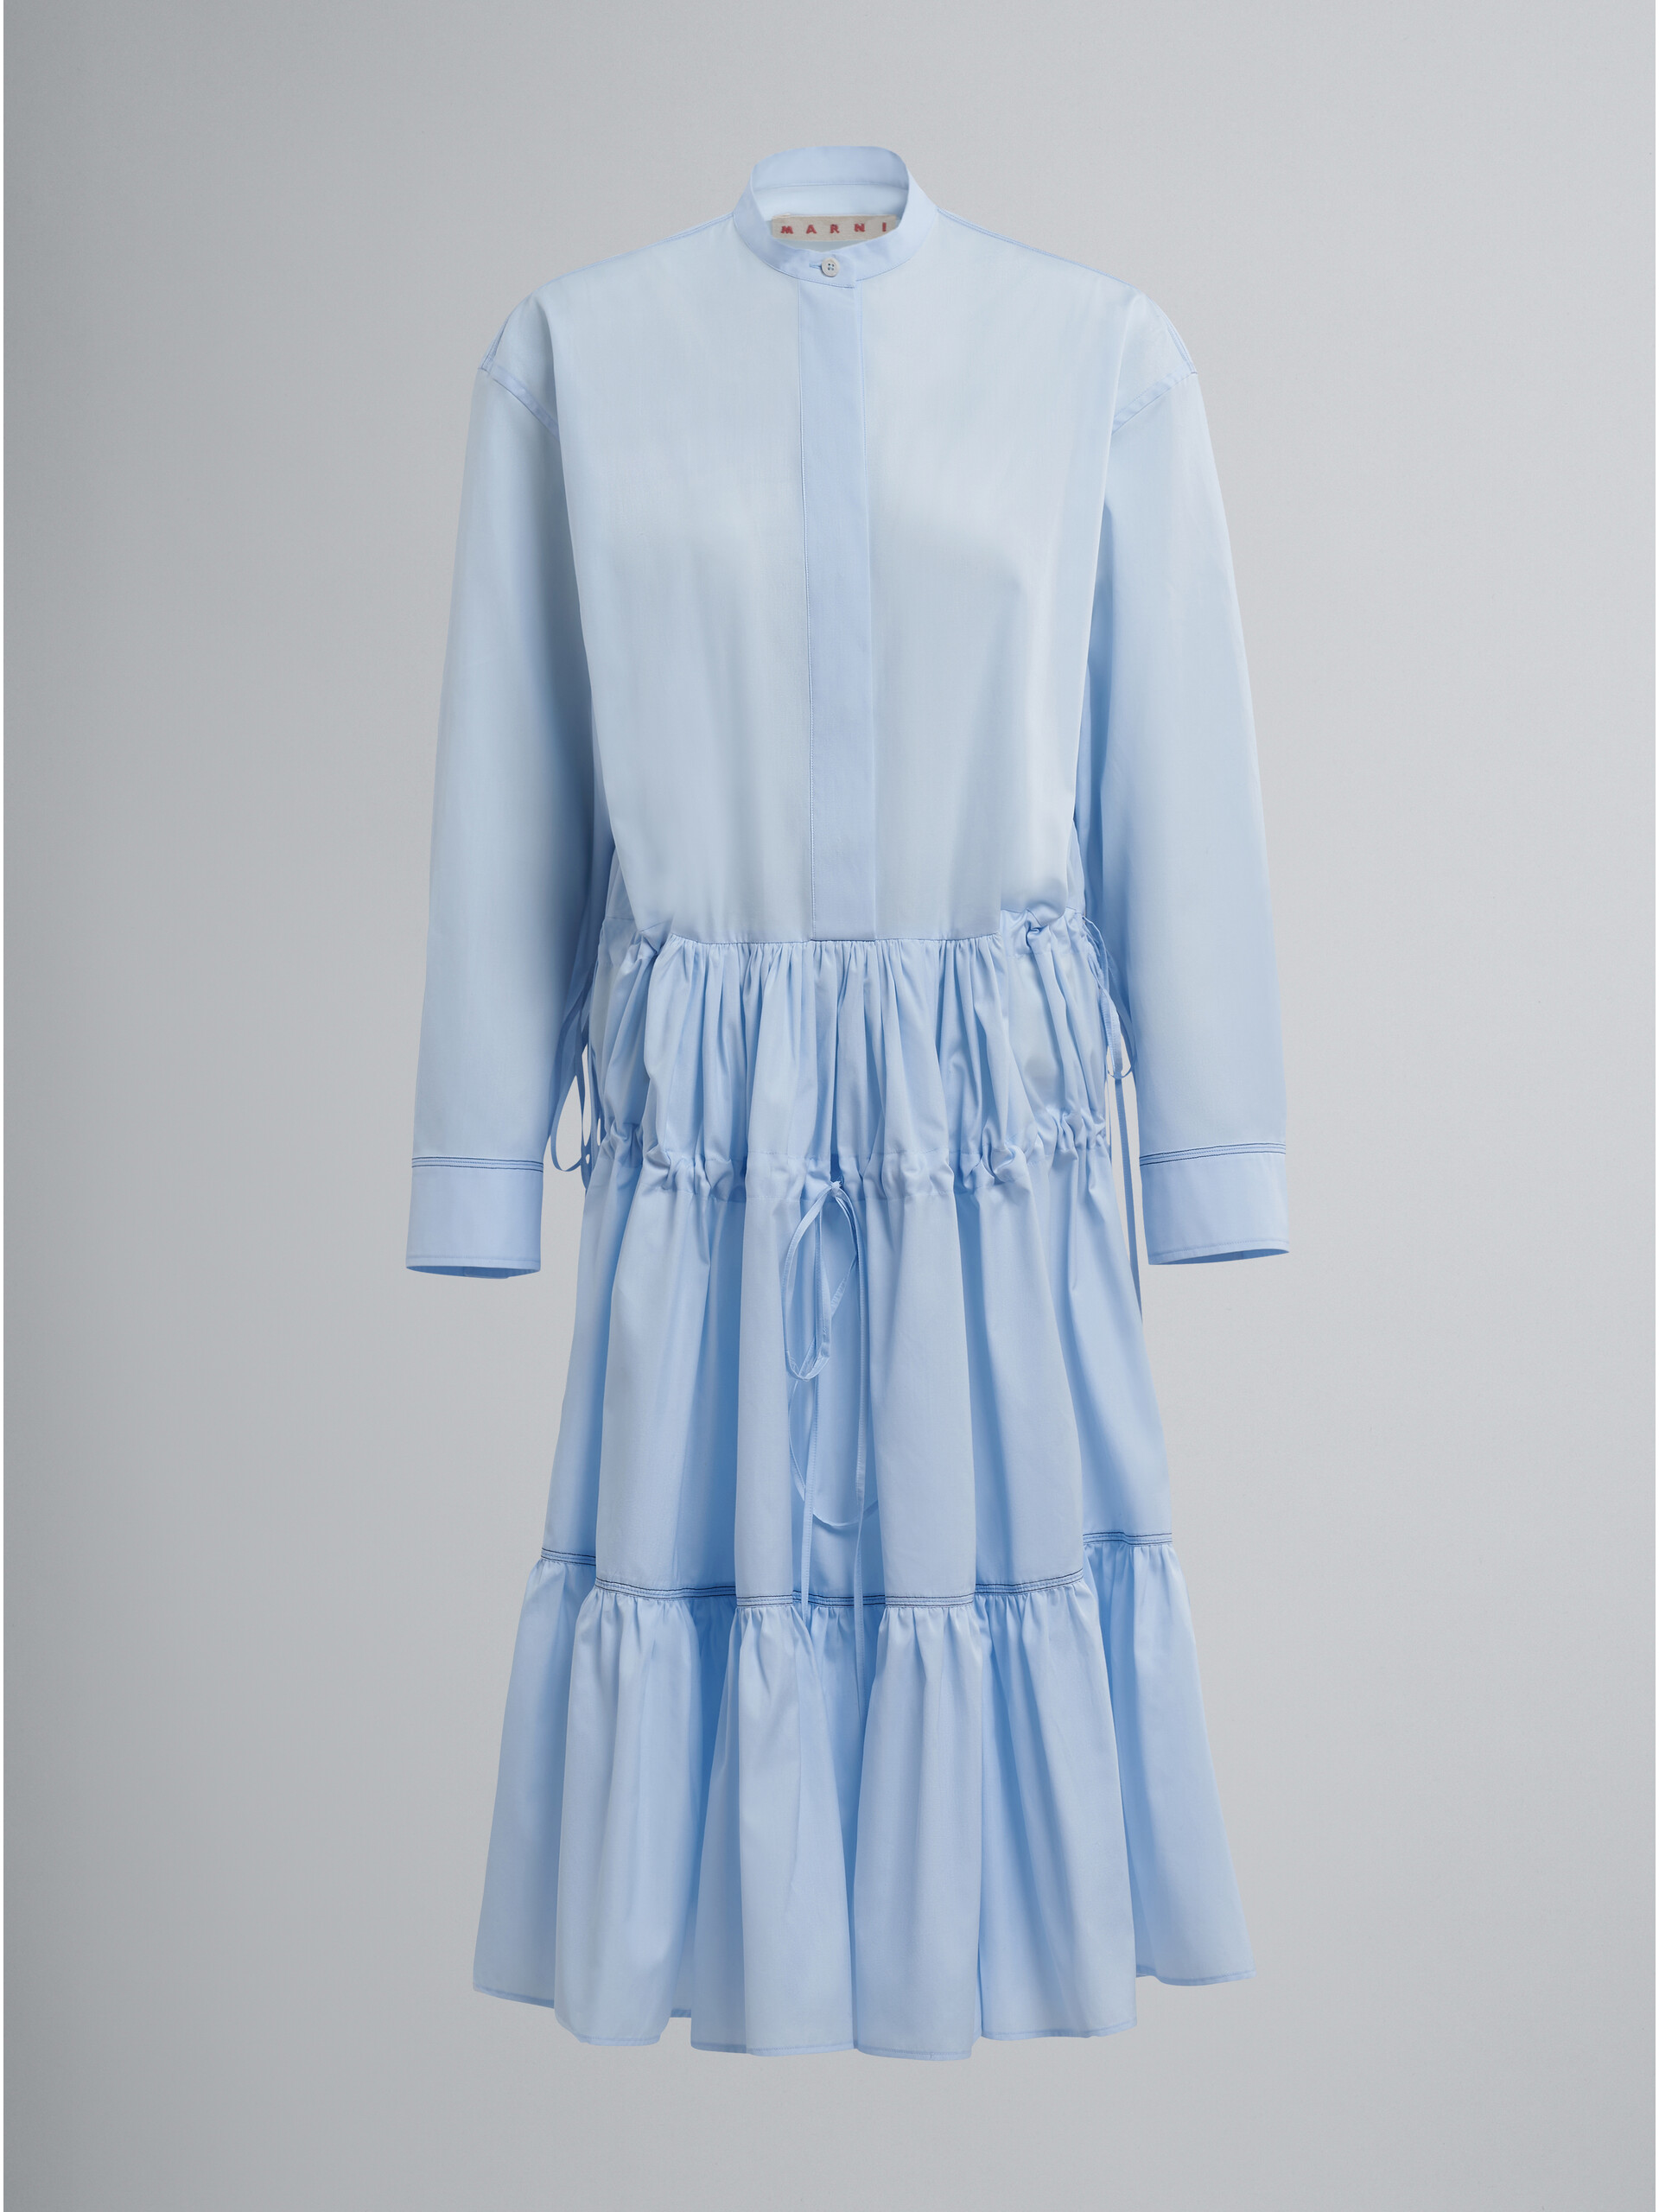 Cotton poplin chemisier dress - Dresses - Image 1